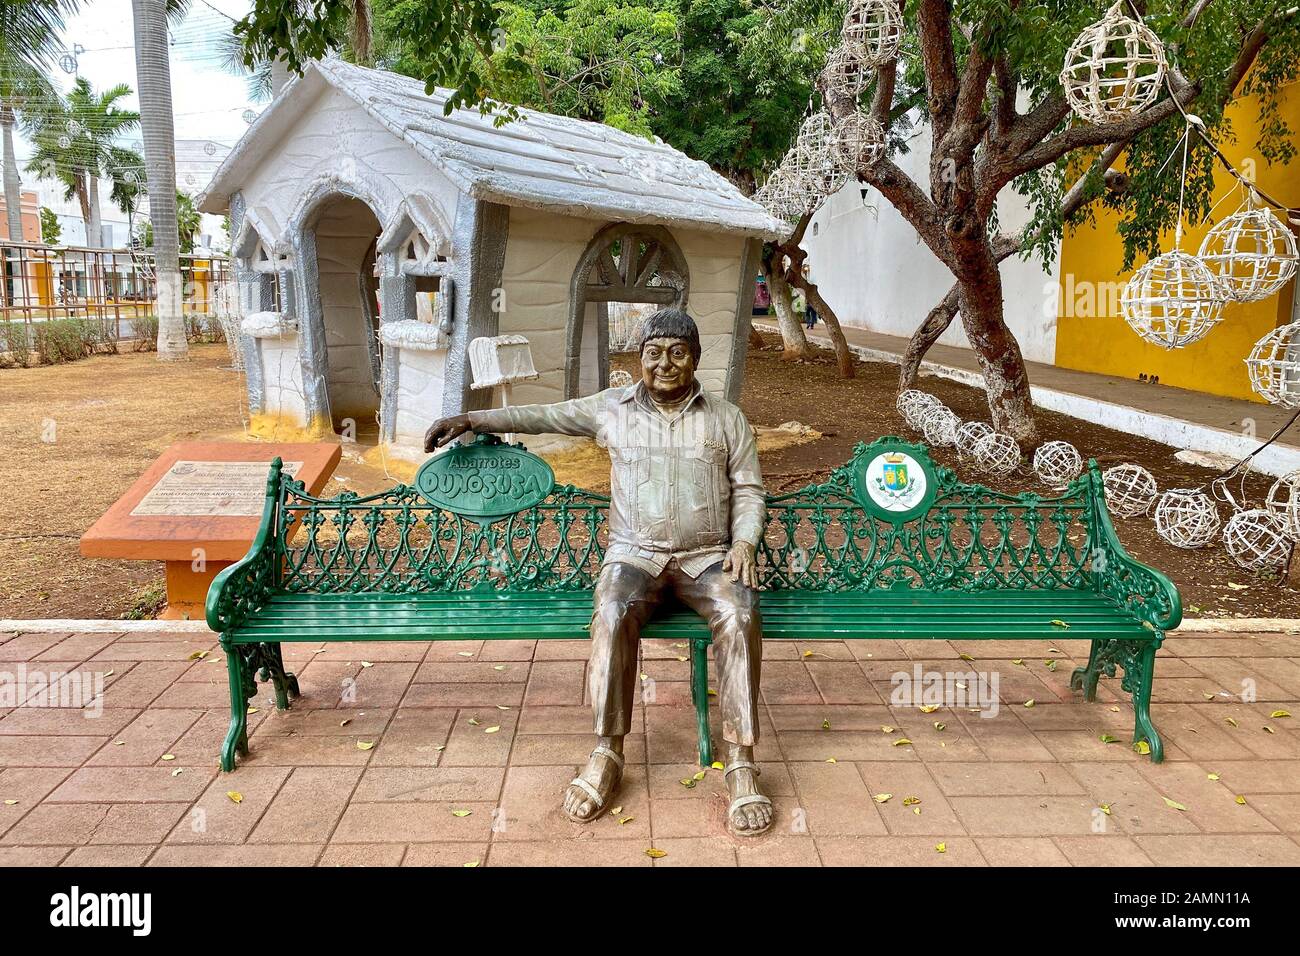 Statue of Hector Herrera on bench. Merida, Mexico. Stock Photo